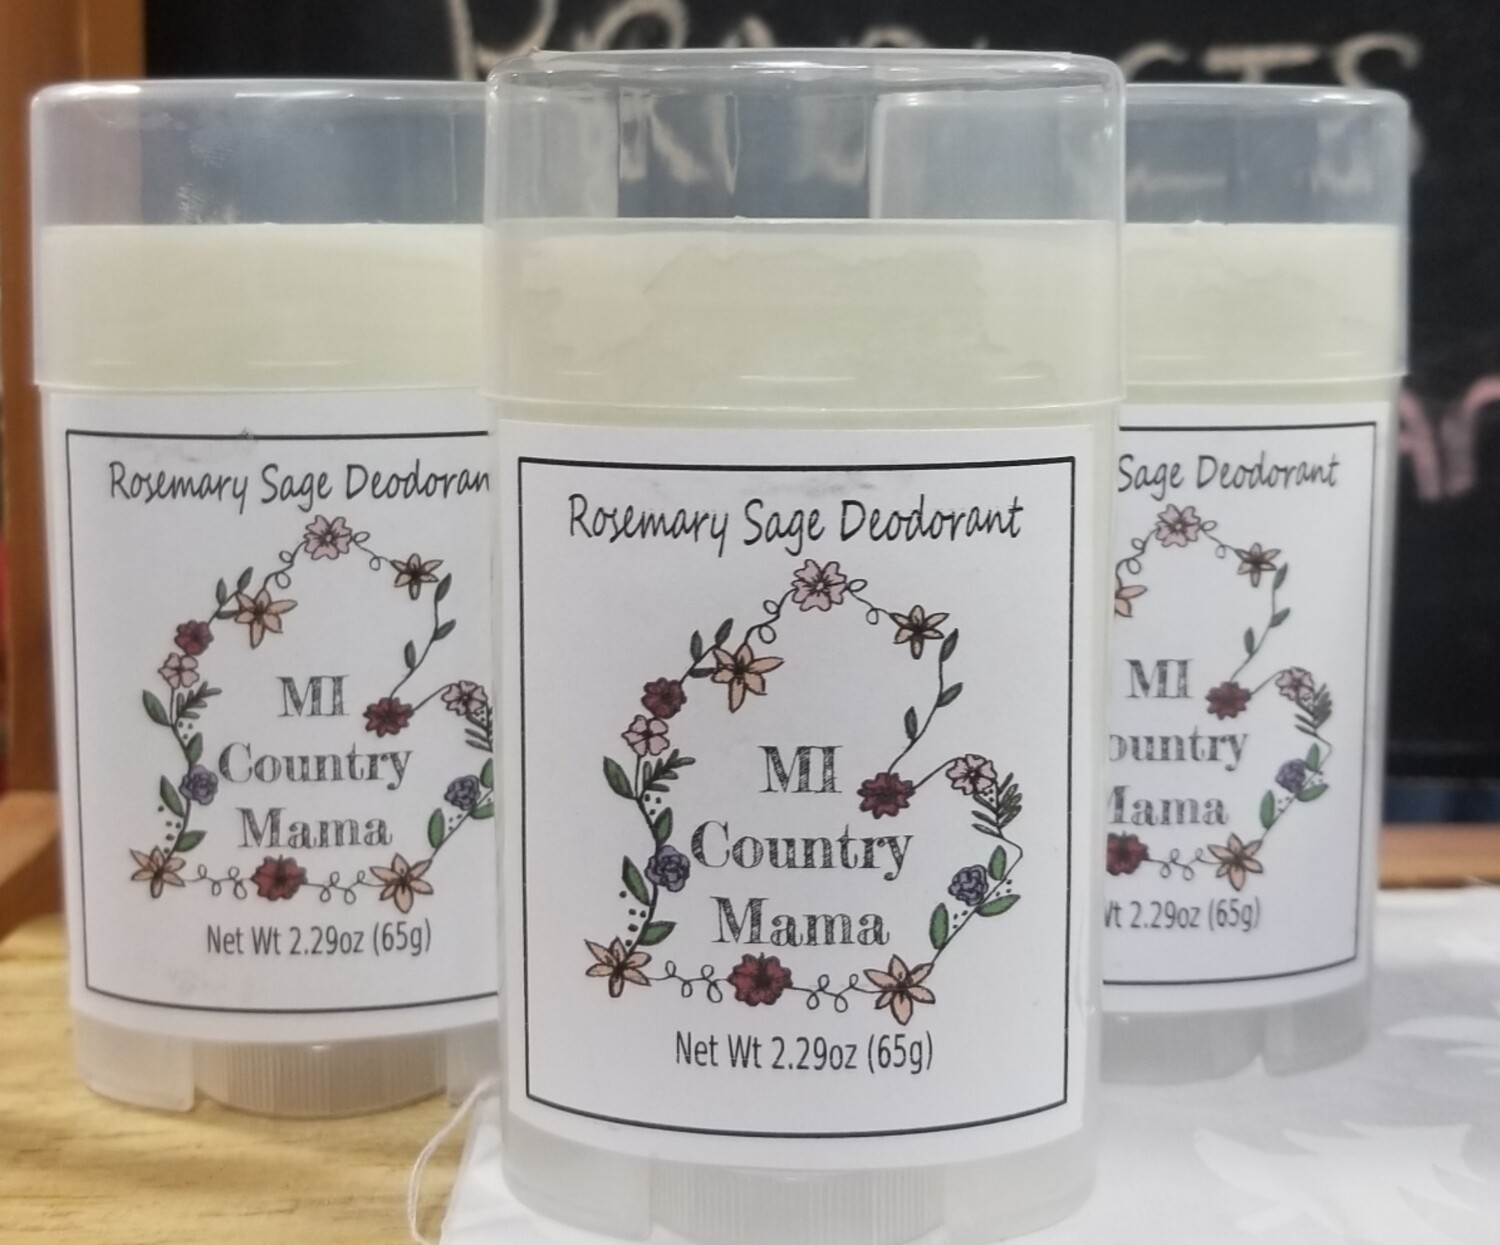 Rosemary sage Deodorant